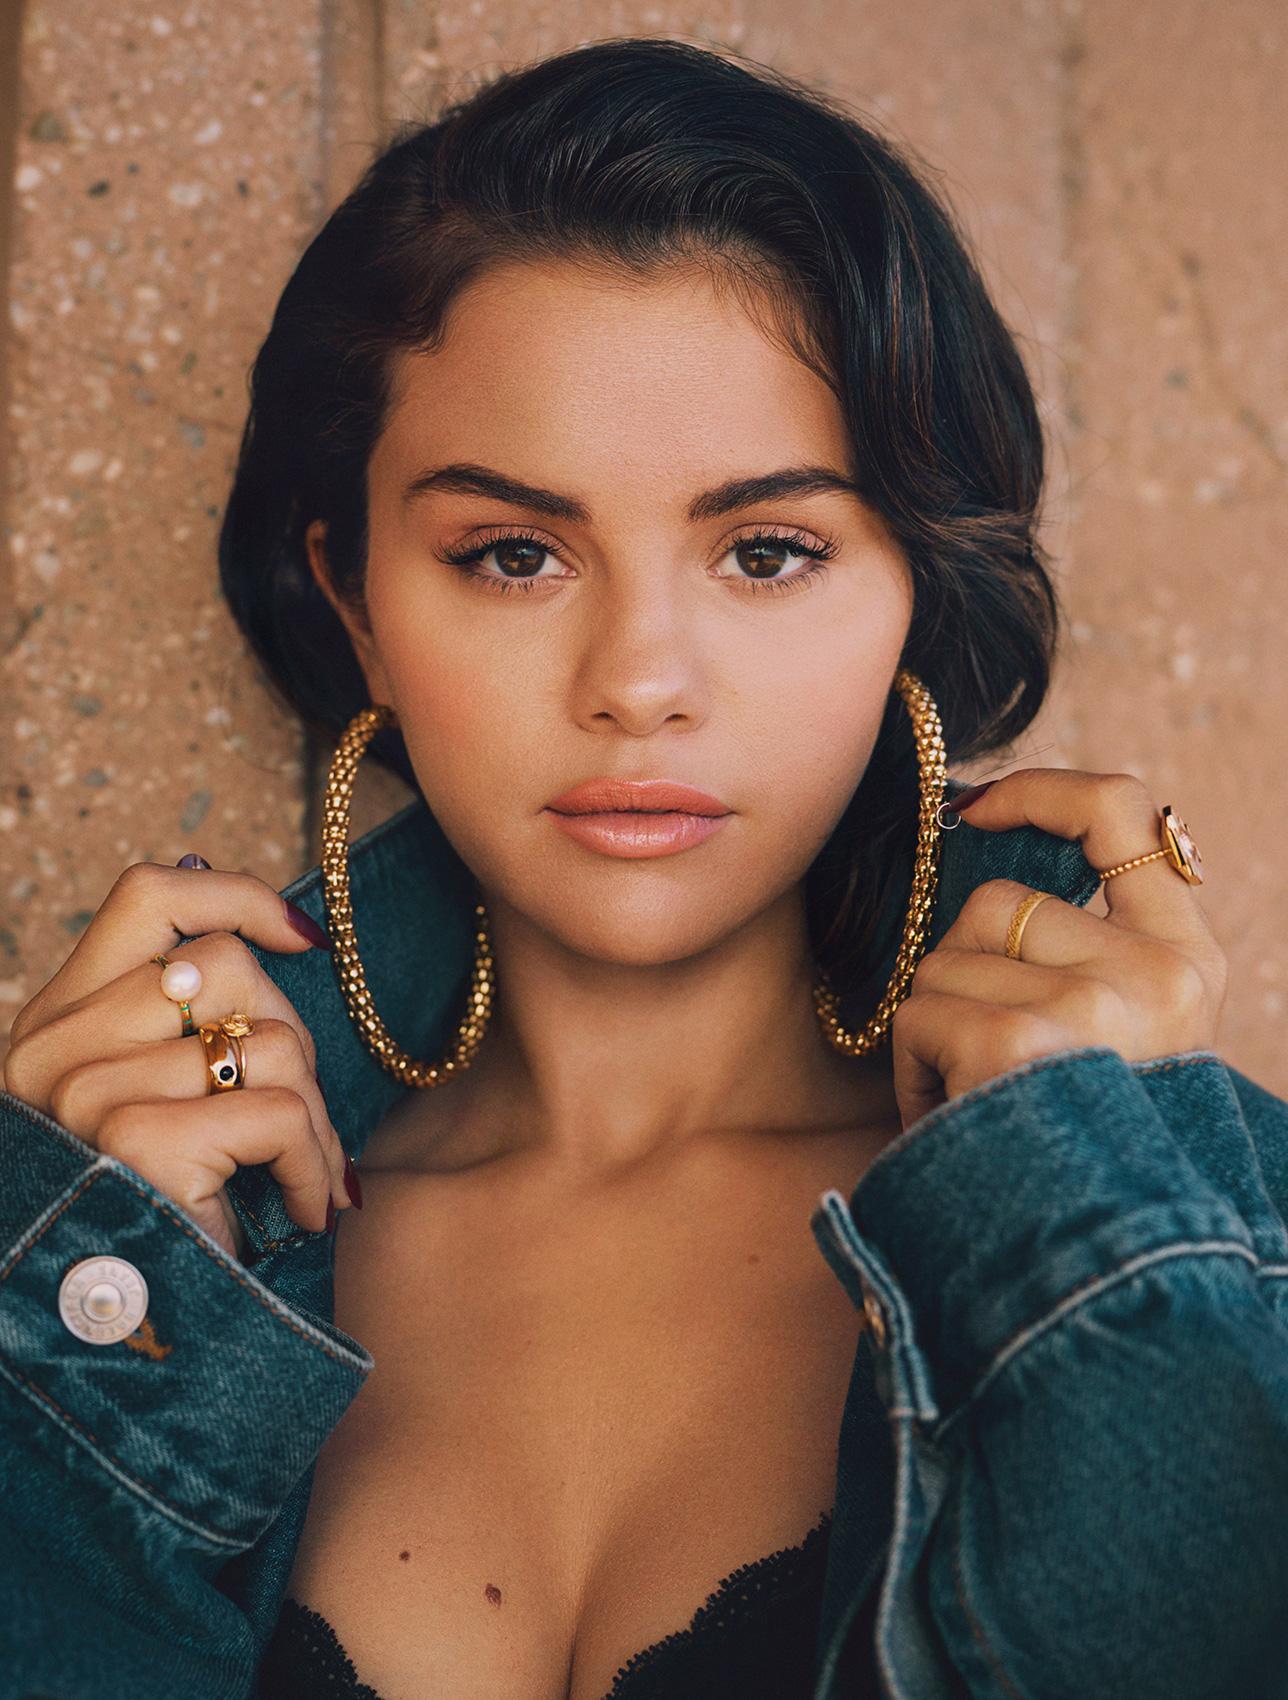 Selena Gomez Instagram Story October 31, 2020 – Star Style